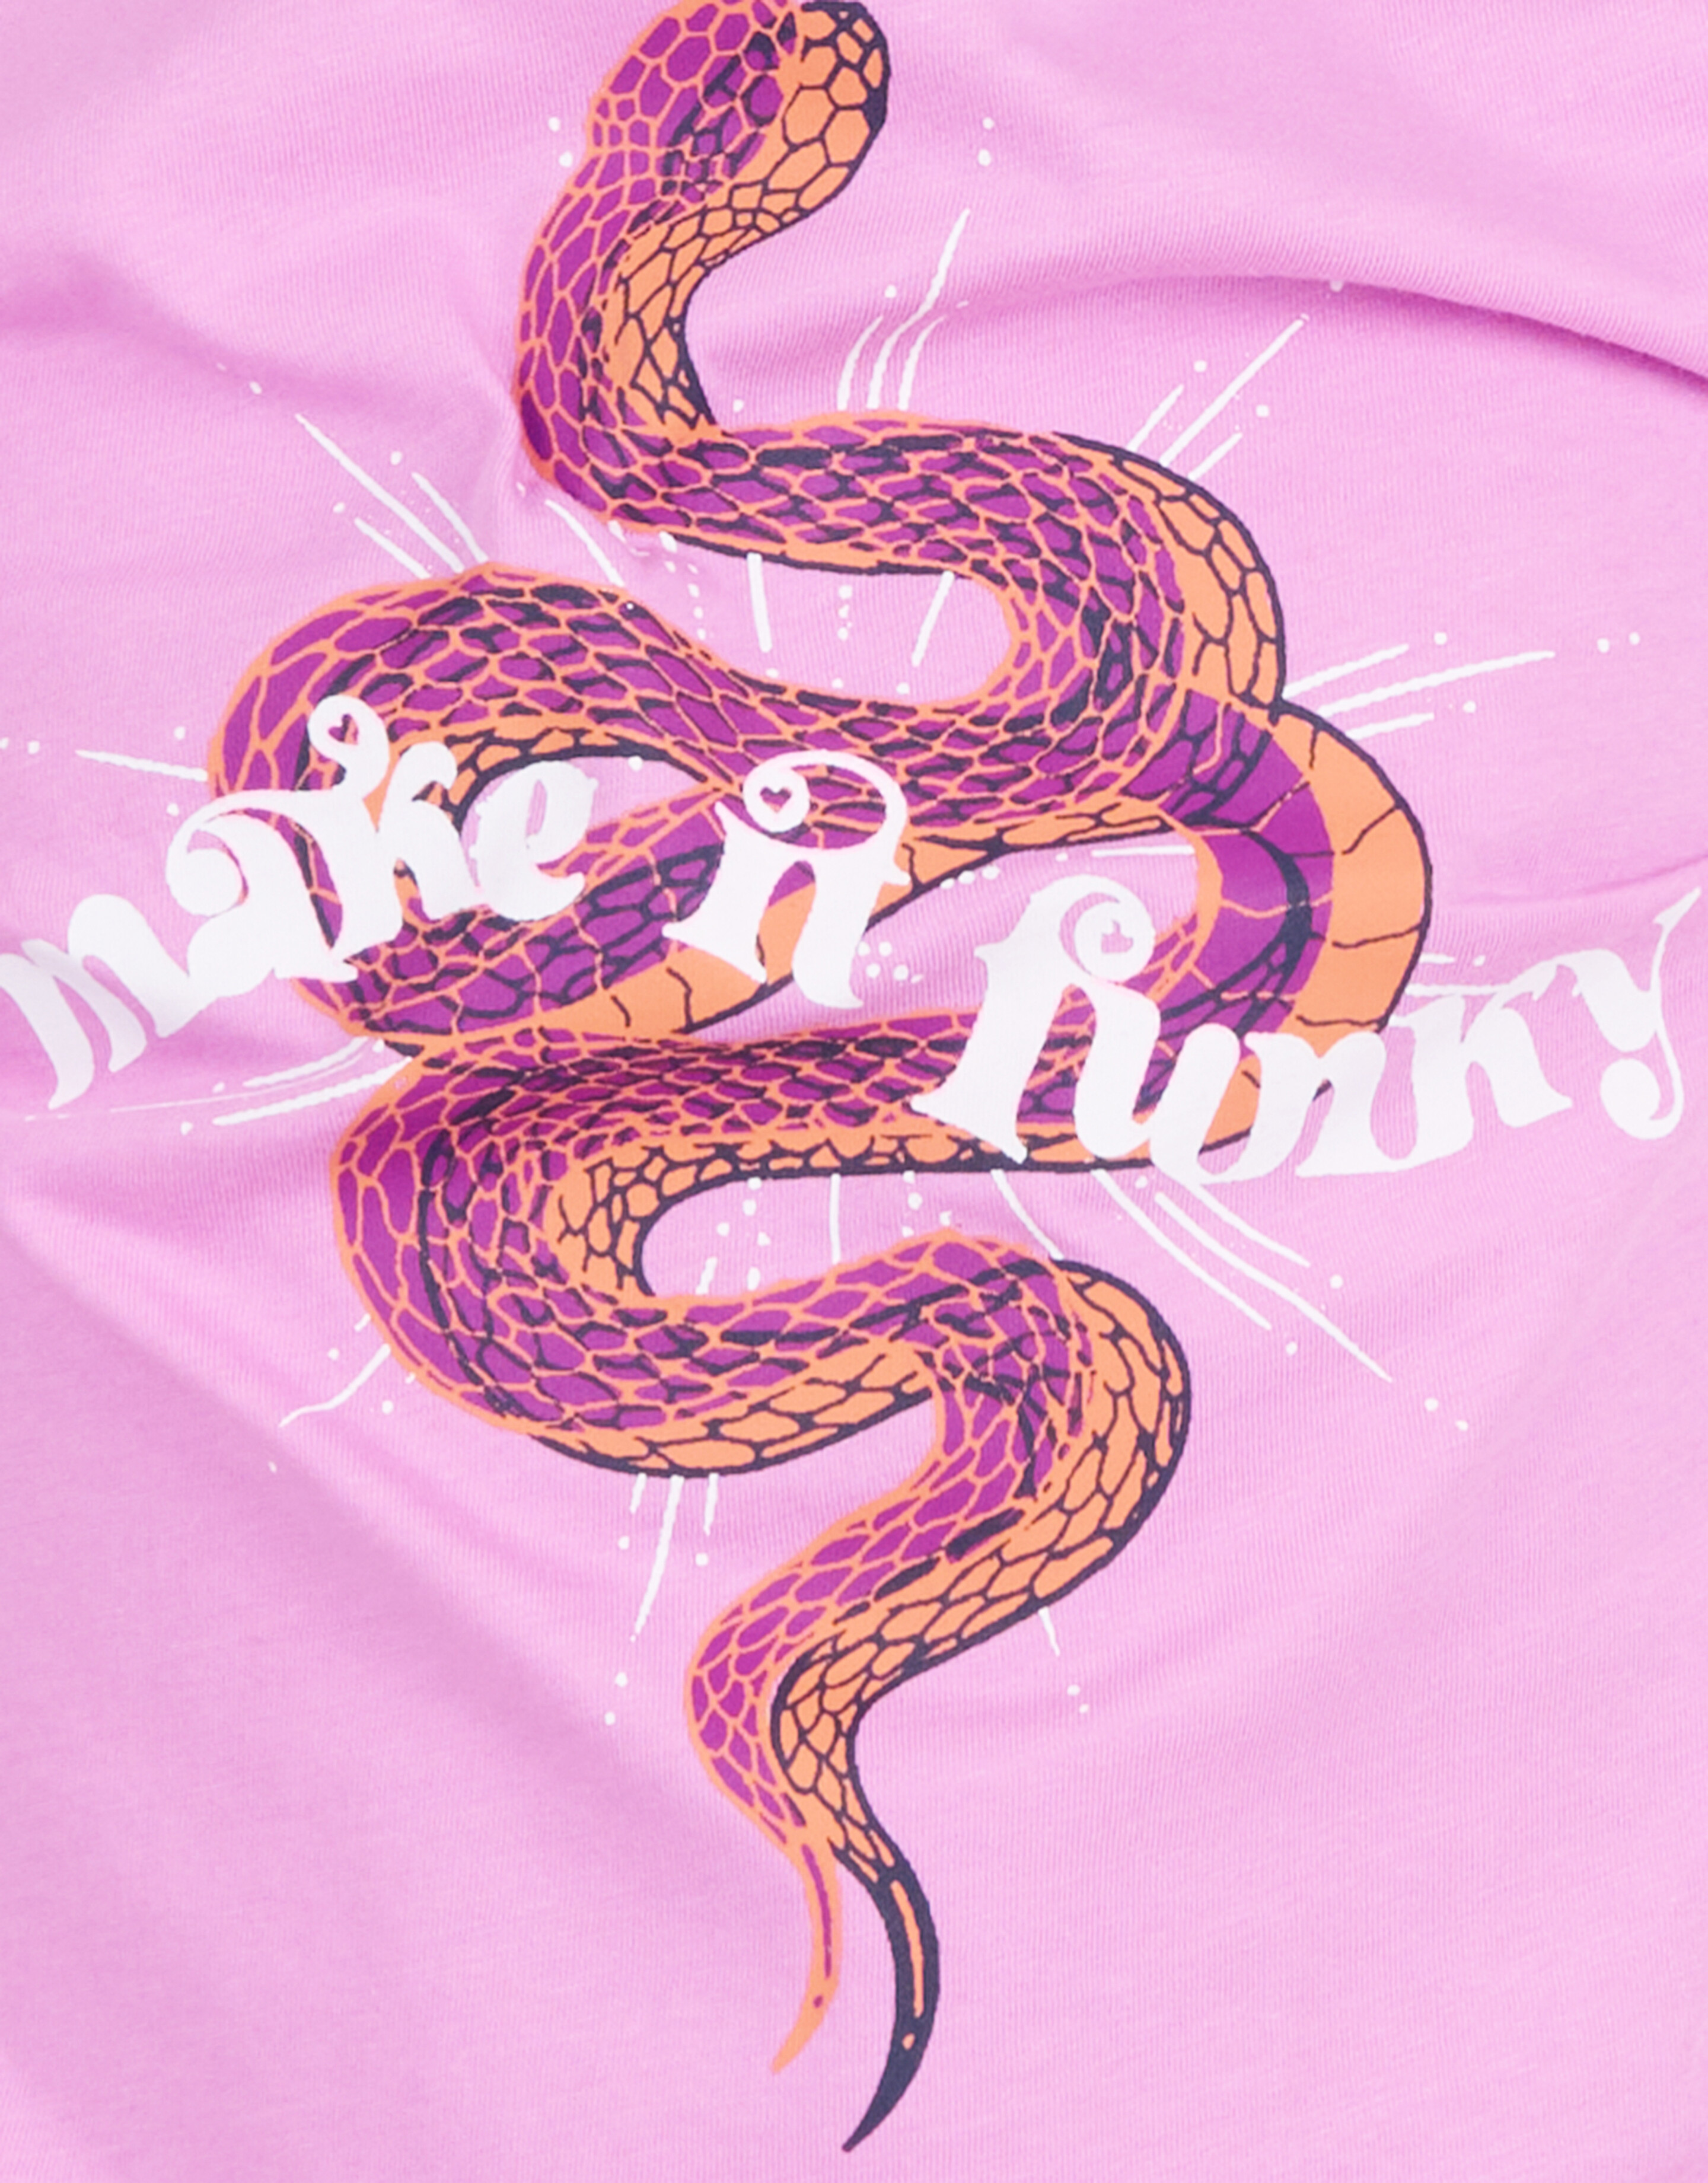 Funky Artwork T-shirt Roze SHOEBY GIRLS